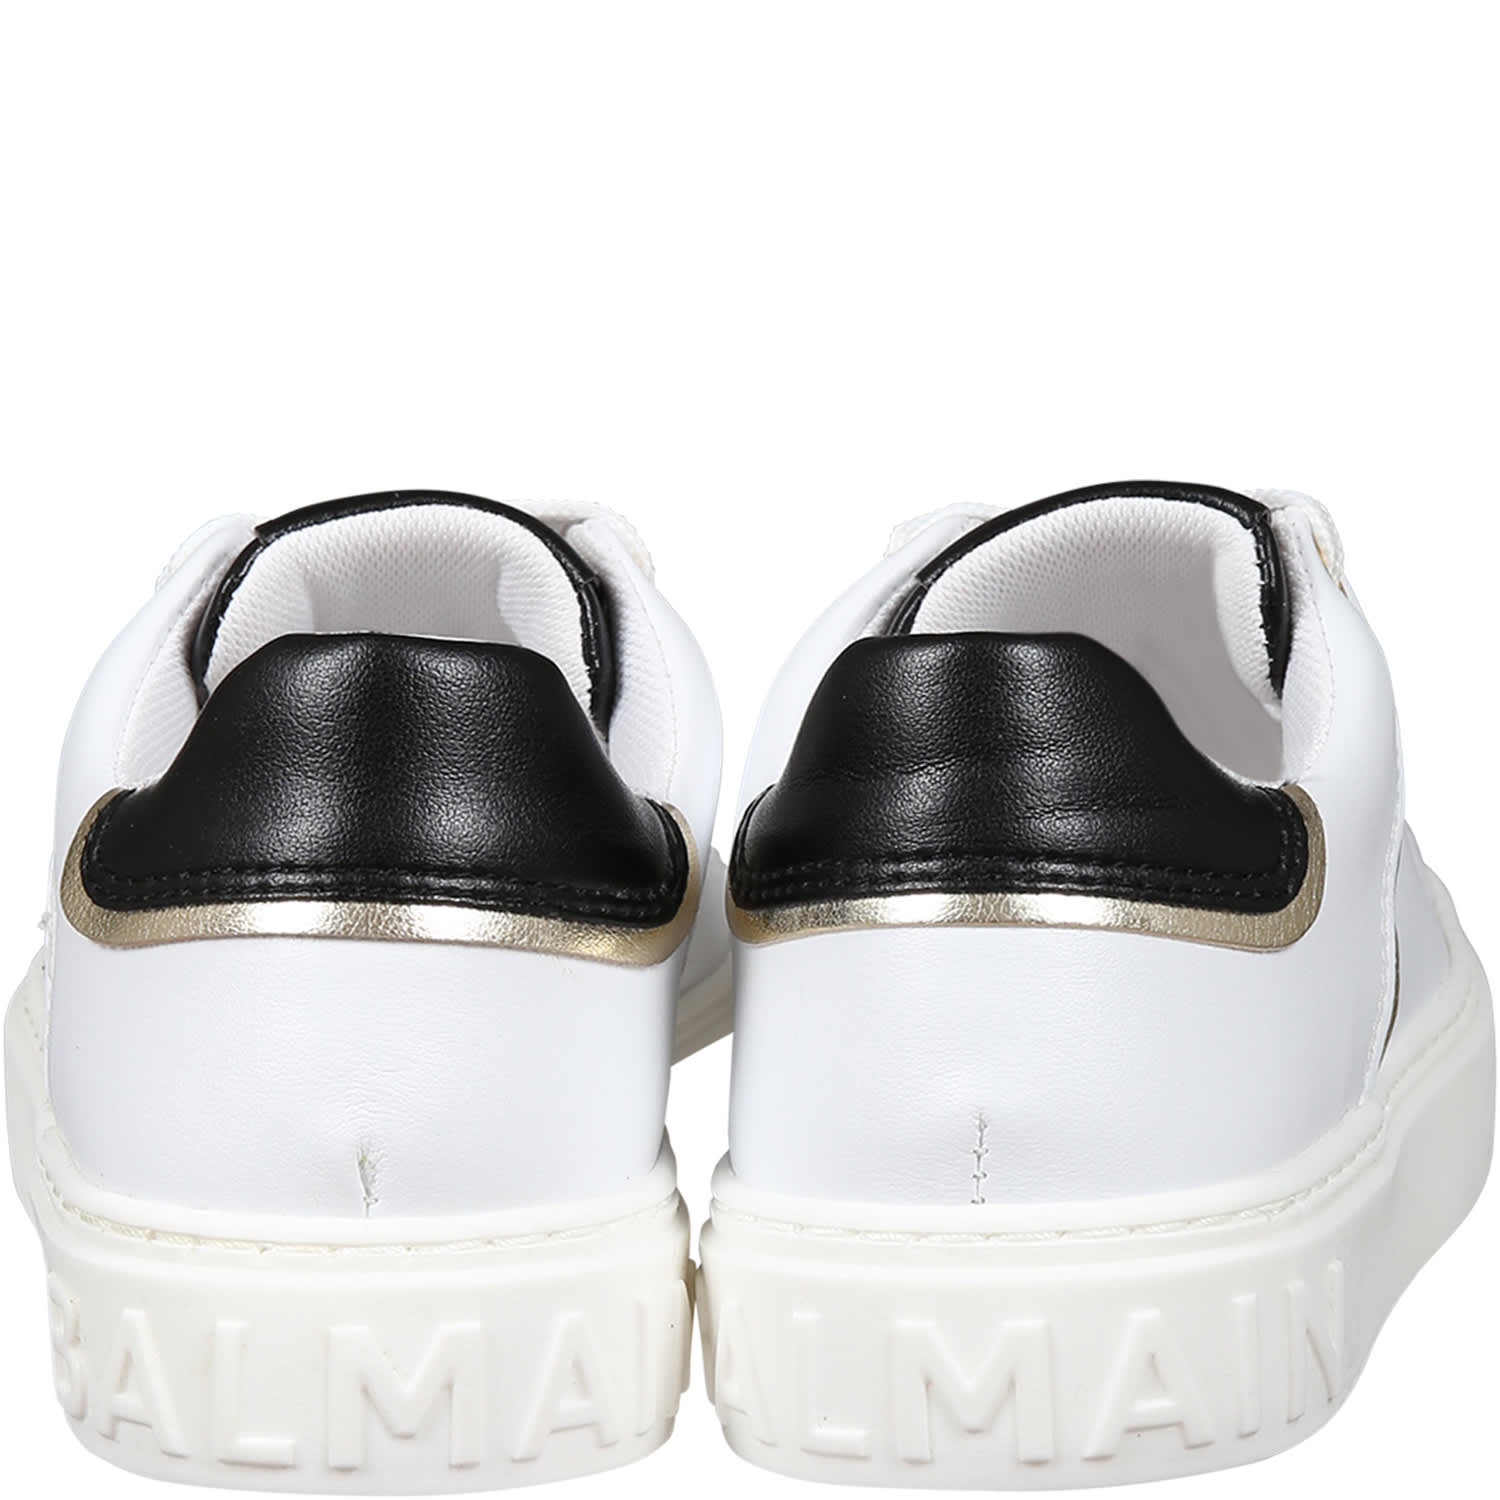 Shop Balmain White Sneakers For Kids With Logo